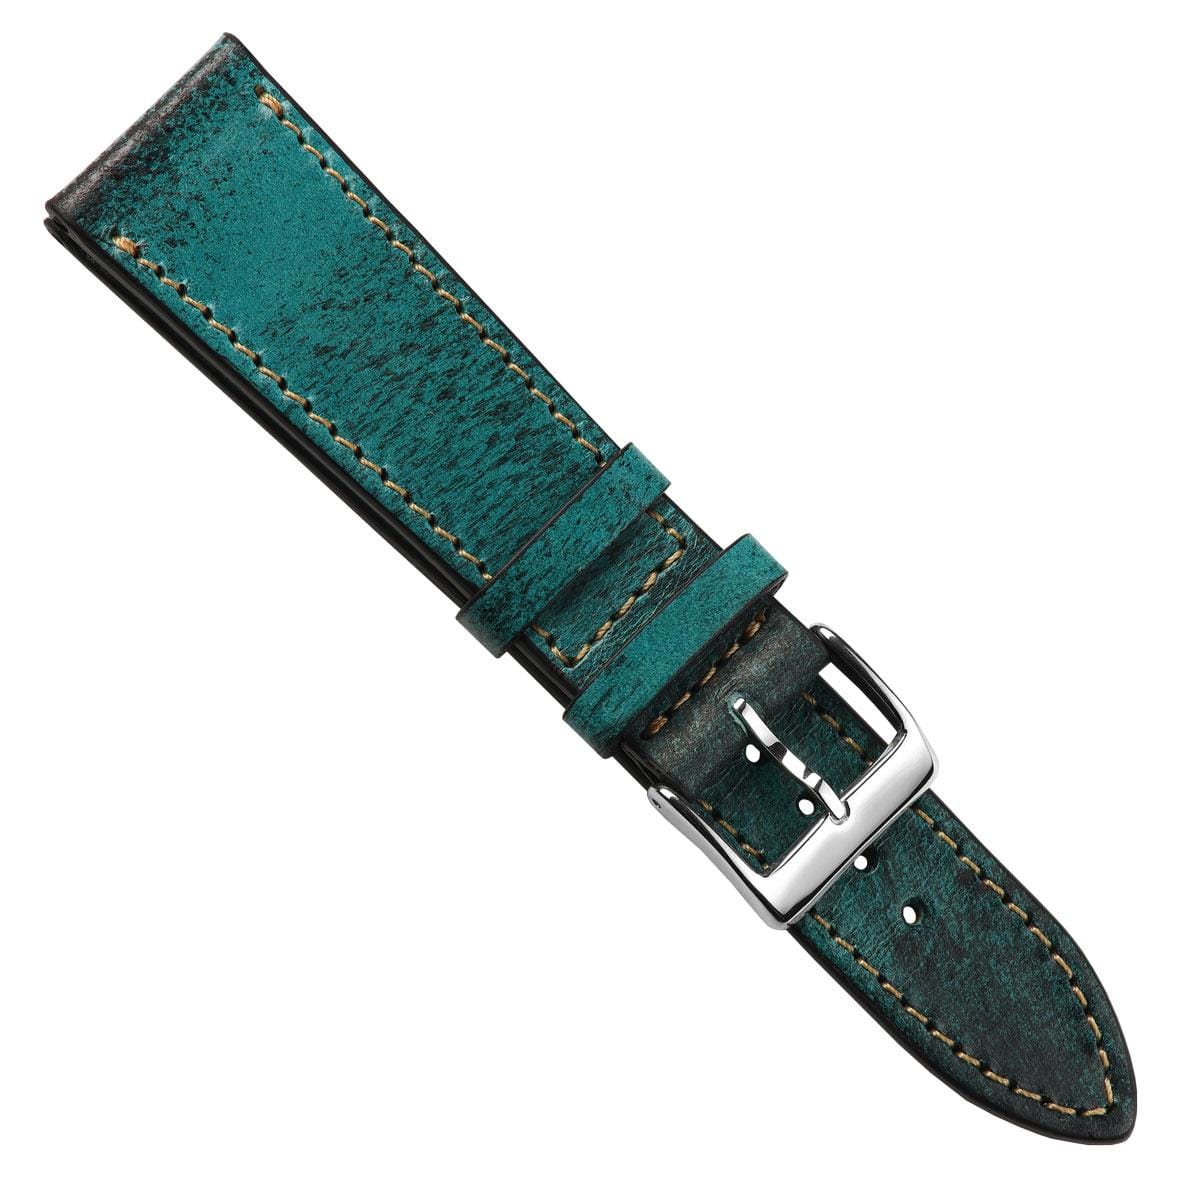 Radstock Vintage Genuine Leather Watch Strap - Vintage Turquoise